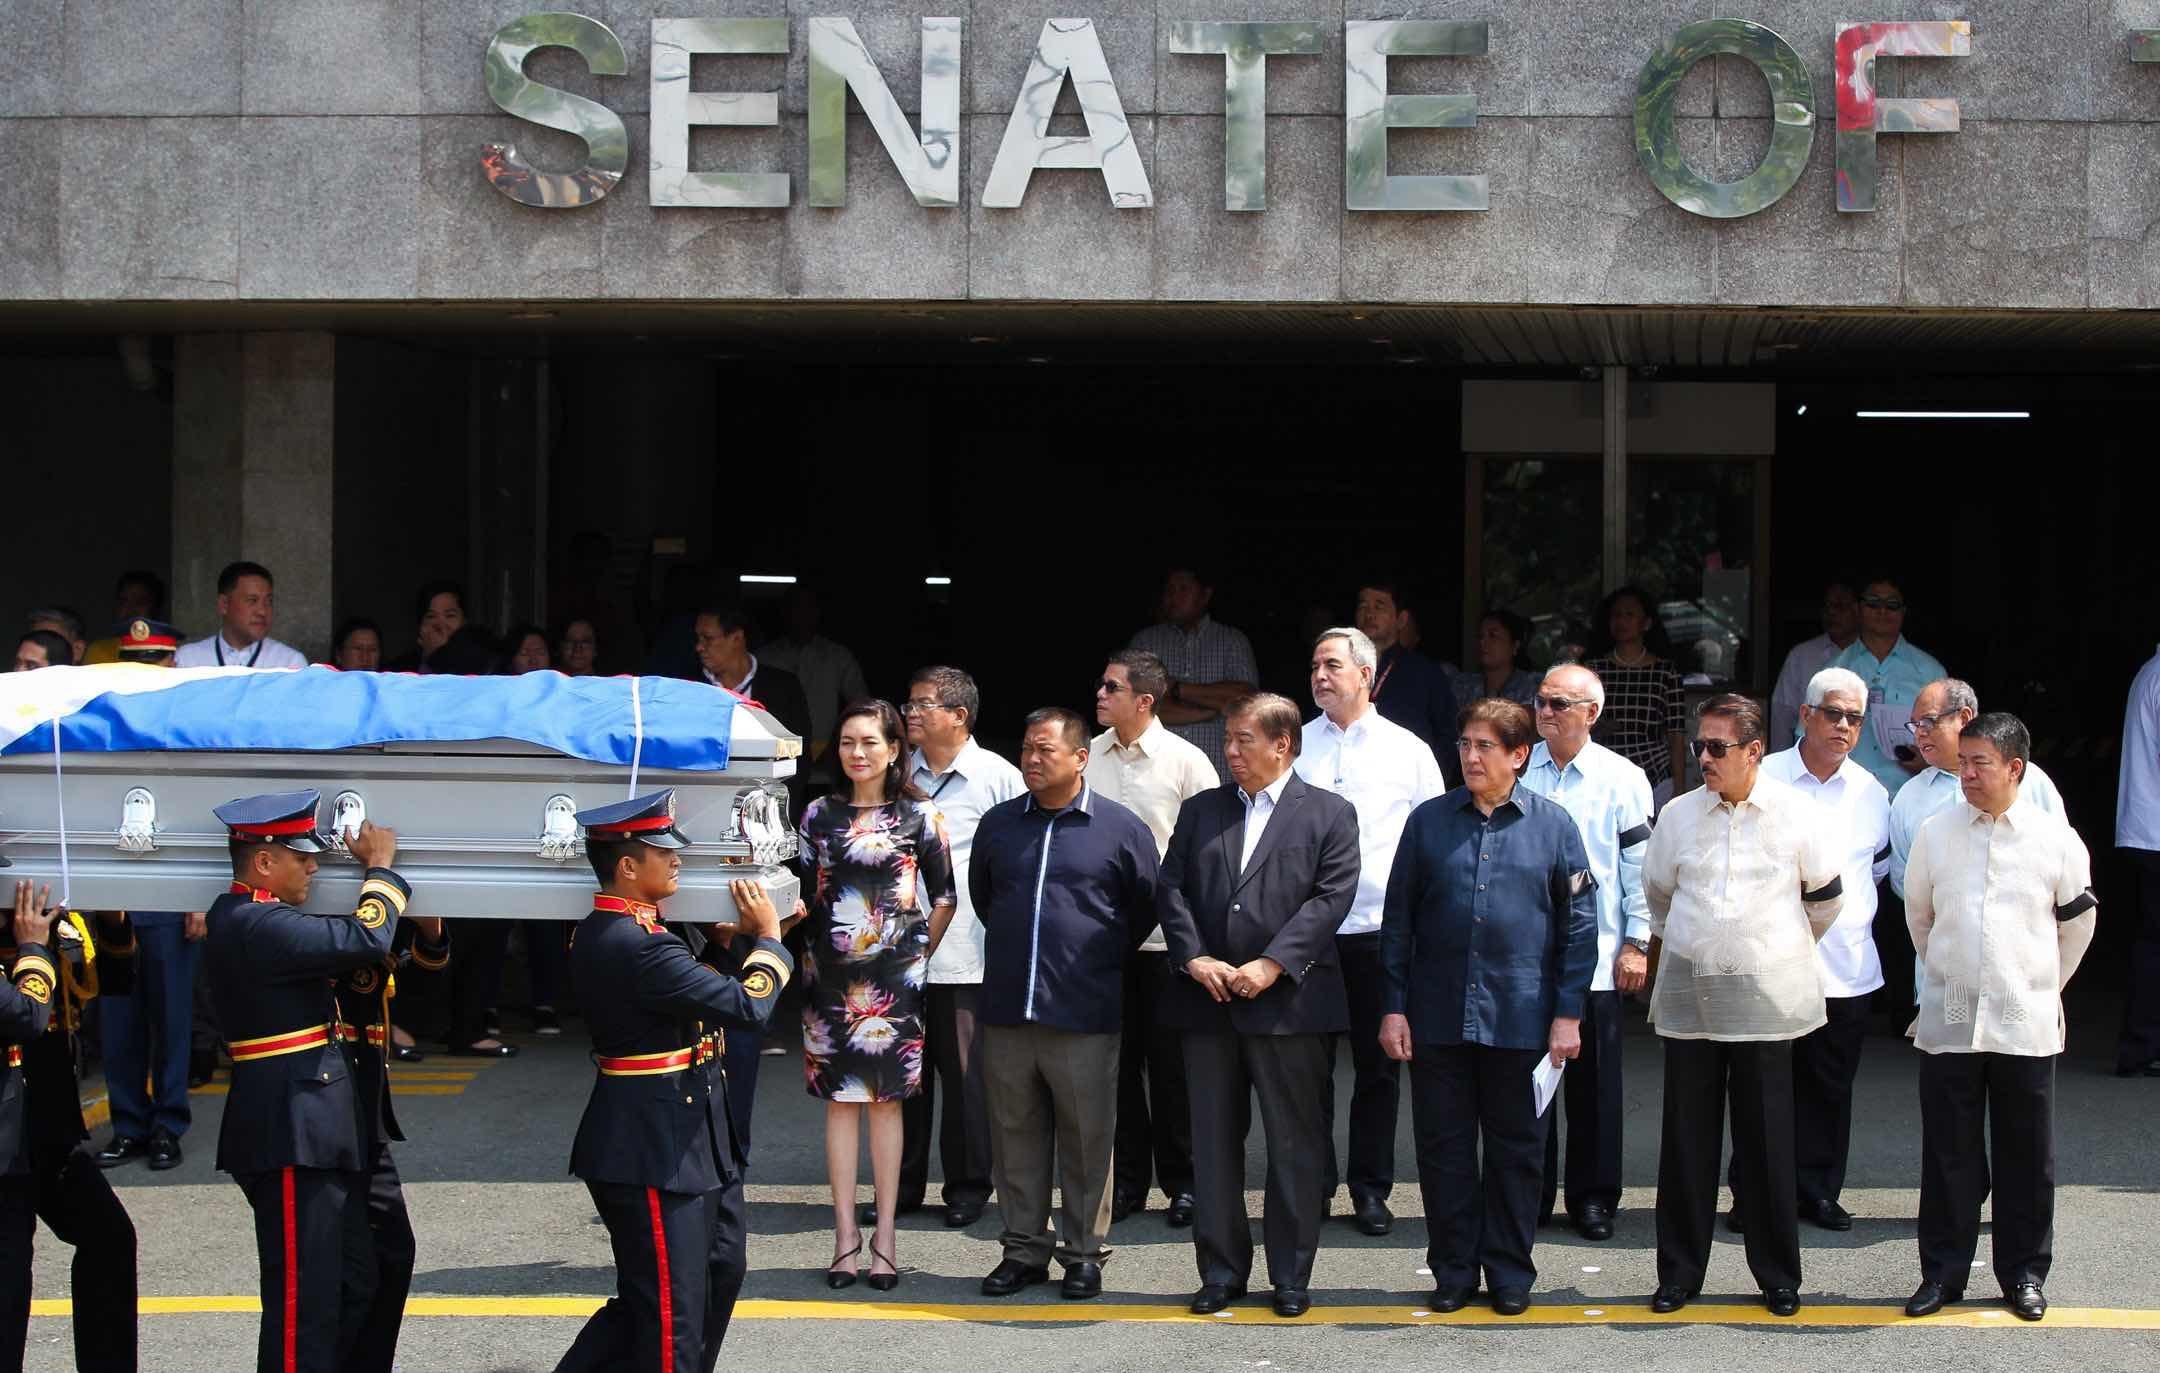 Senate remembers ex-senator Eva Estrada-Kalaw’s courage